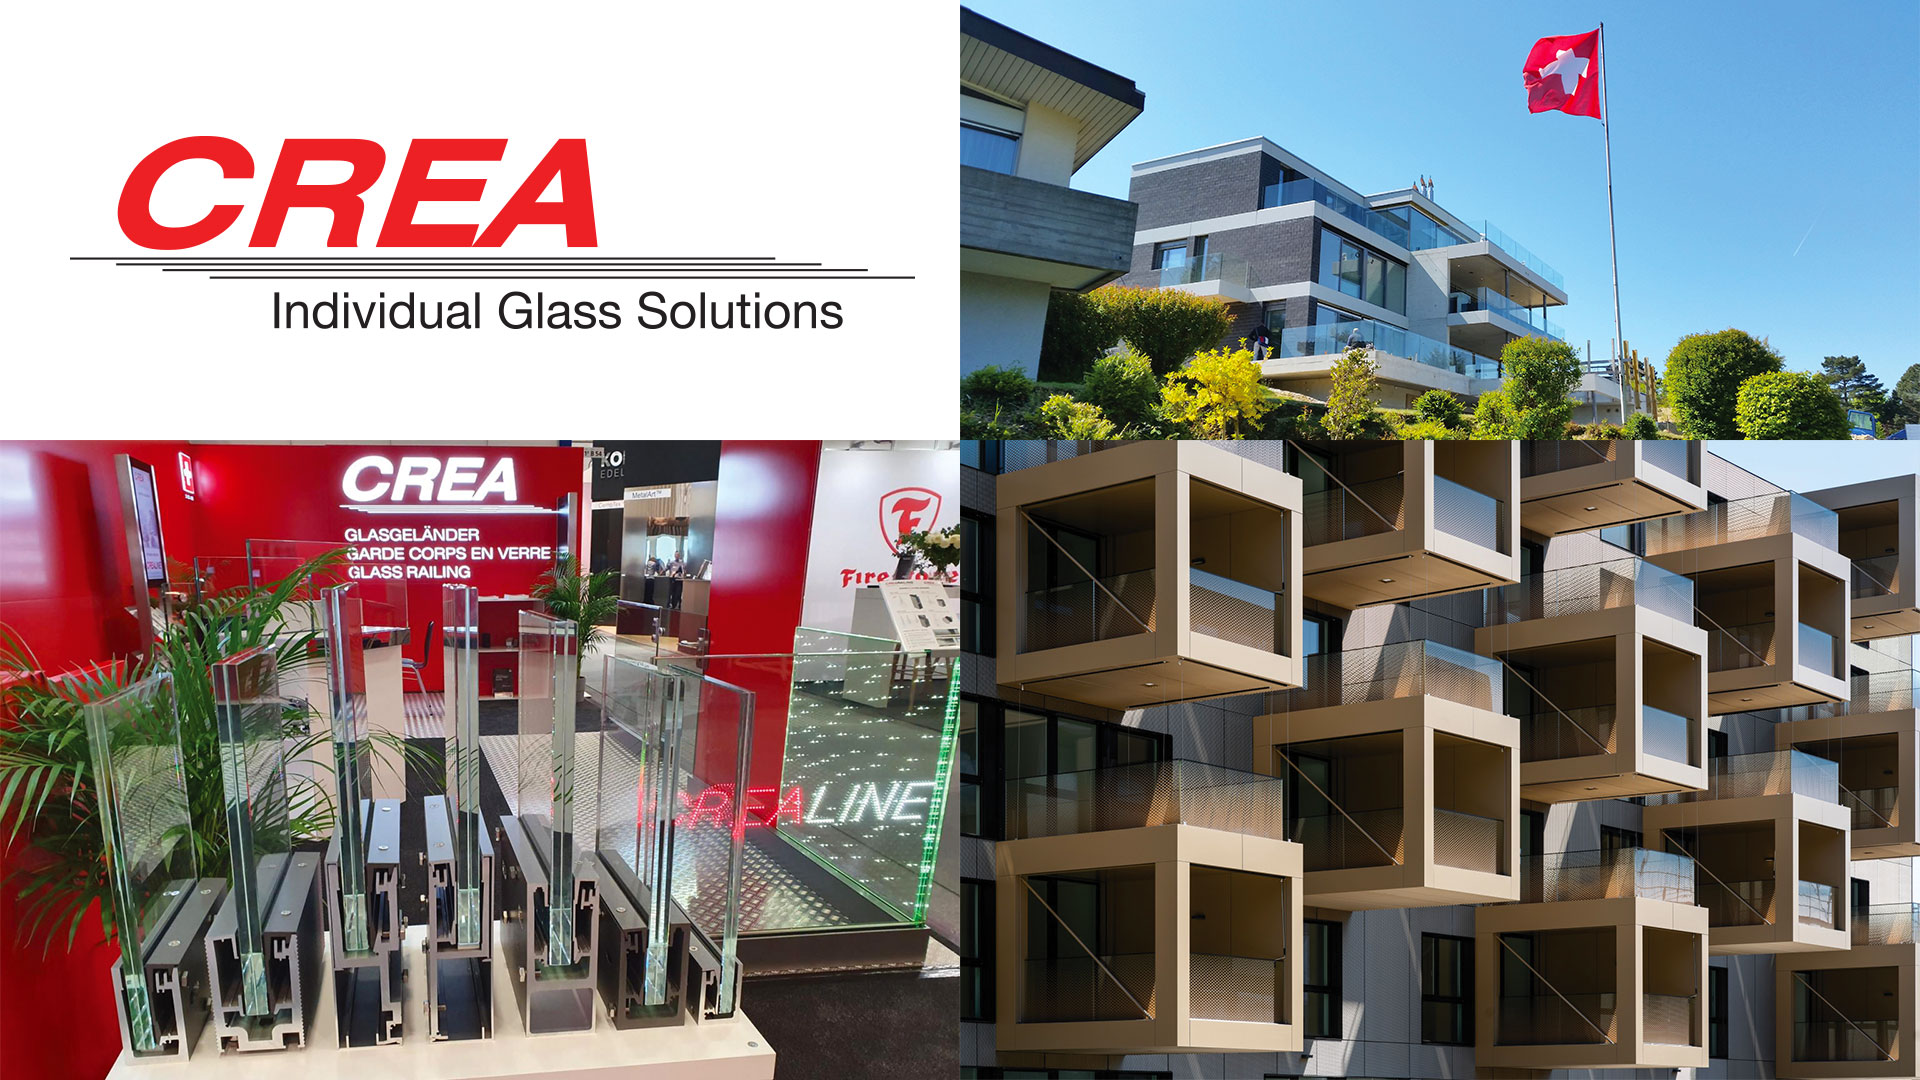 CREA - Individual Glass Solutions